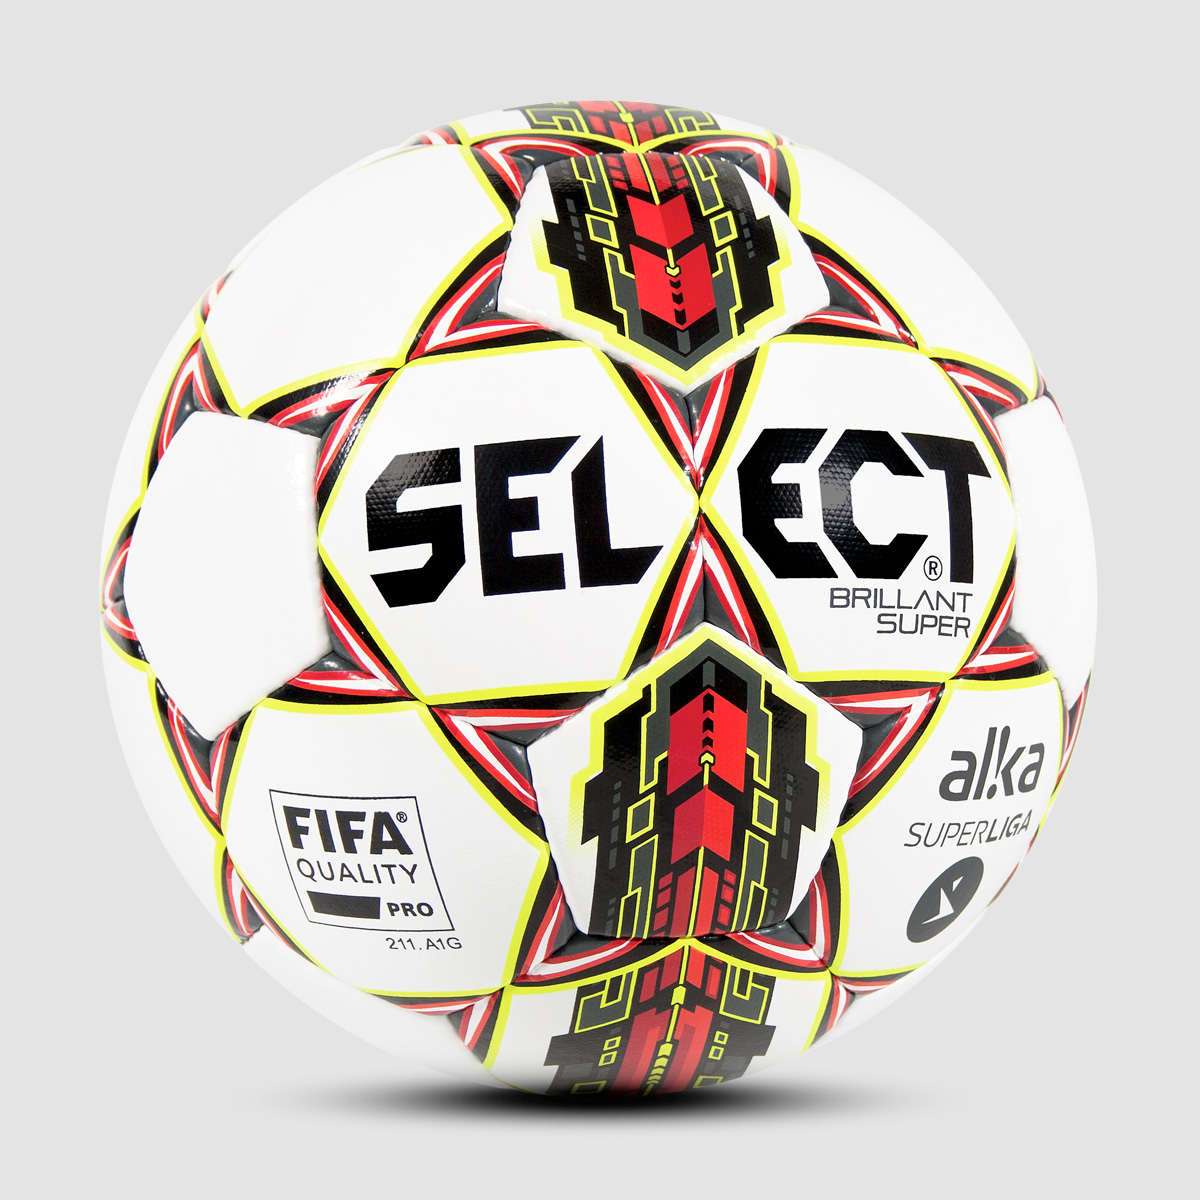 select-brillant-super-superliga-fodbolden-2016-02